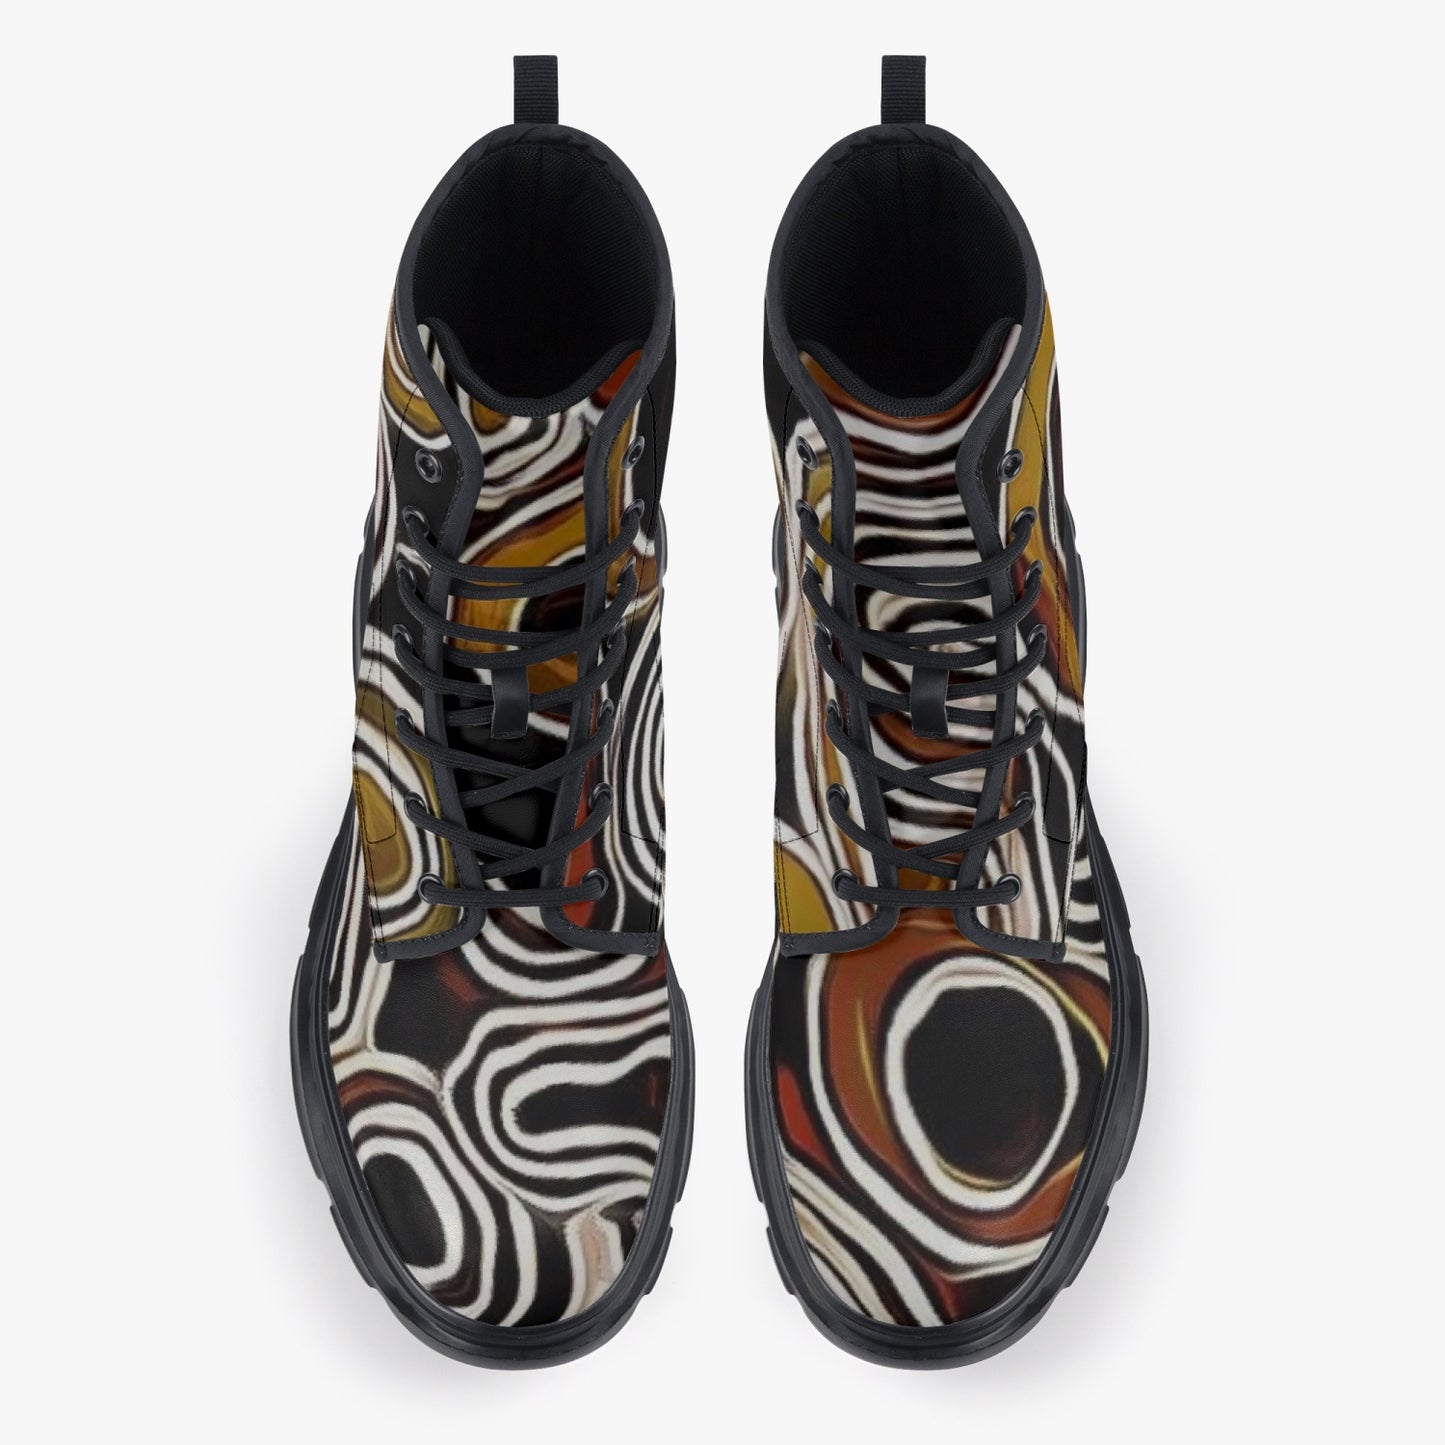 Black Pride Leather Hiking Boots - Koori Threads